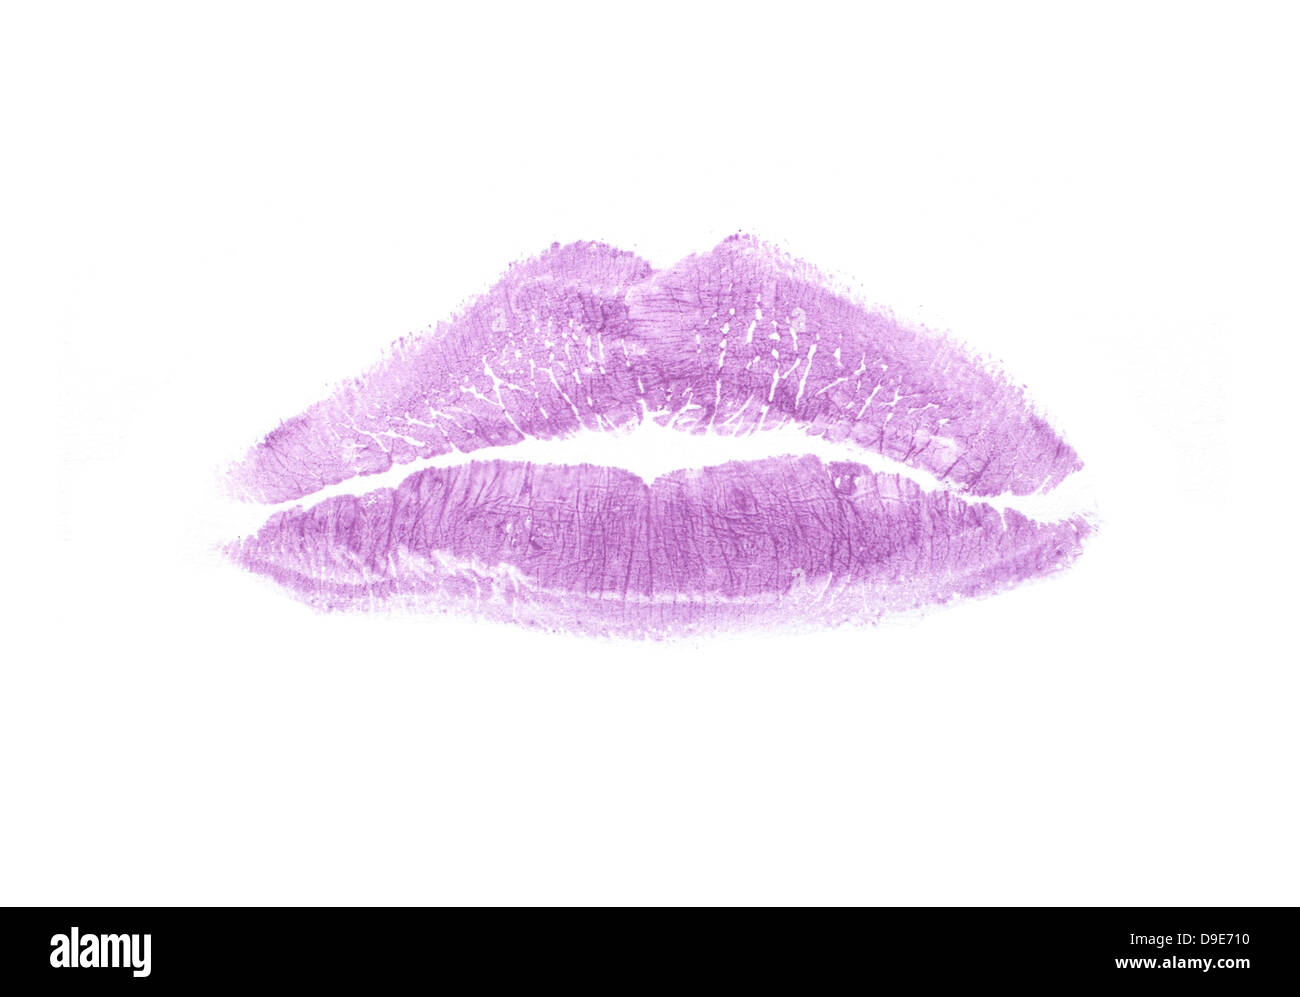 purple lipstick kiss print cut out onto white background Stock Photo